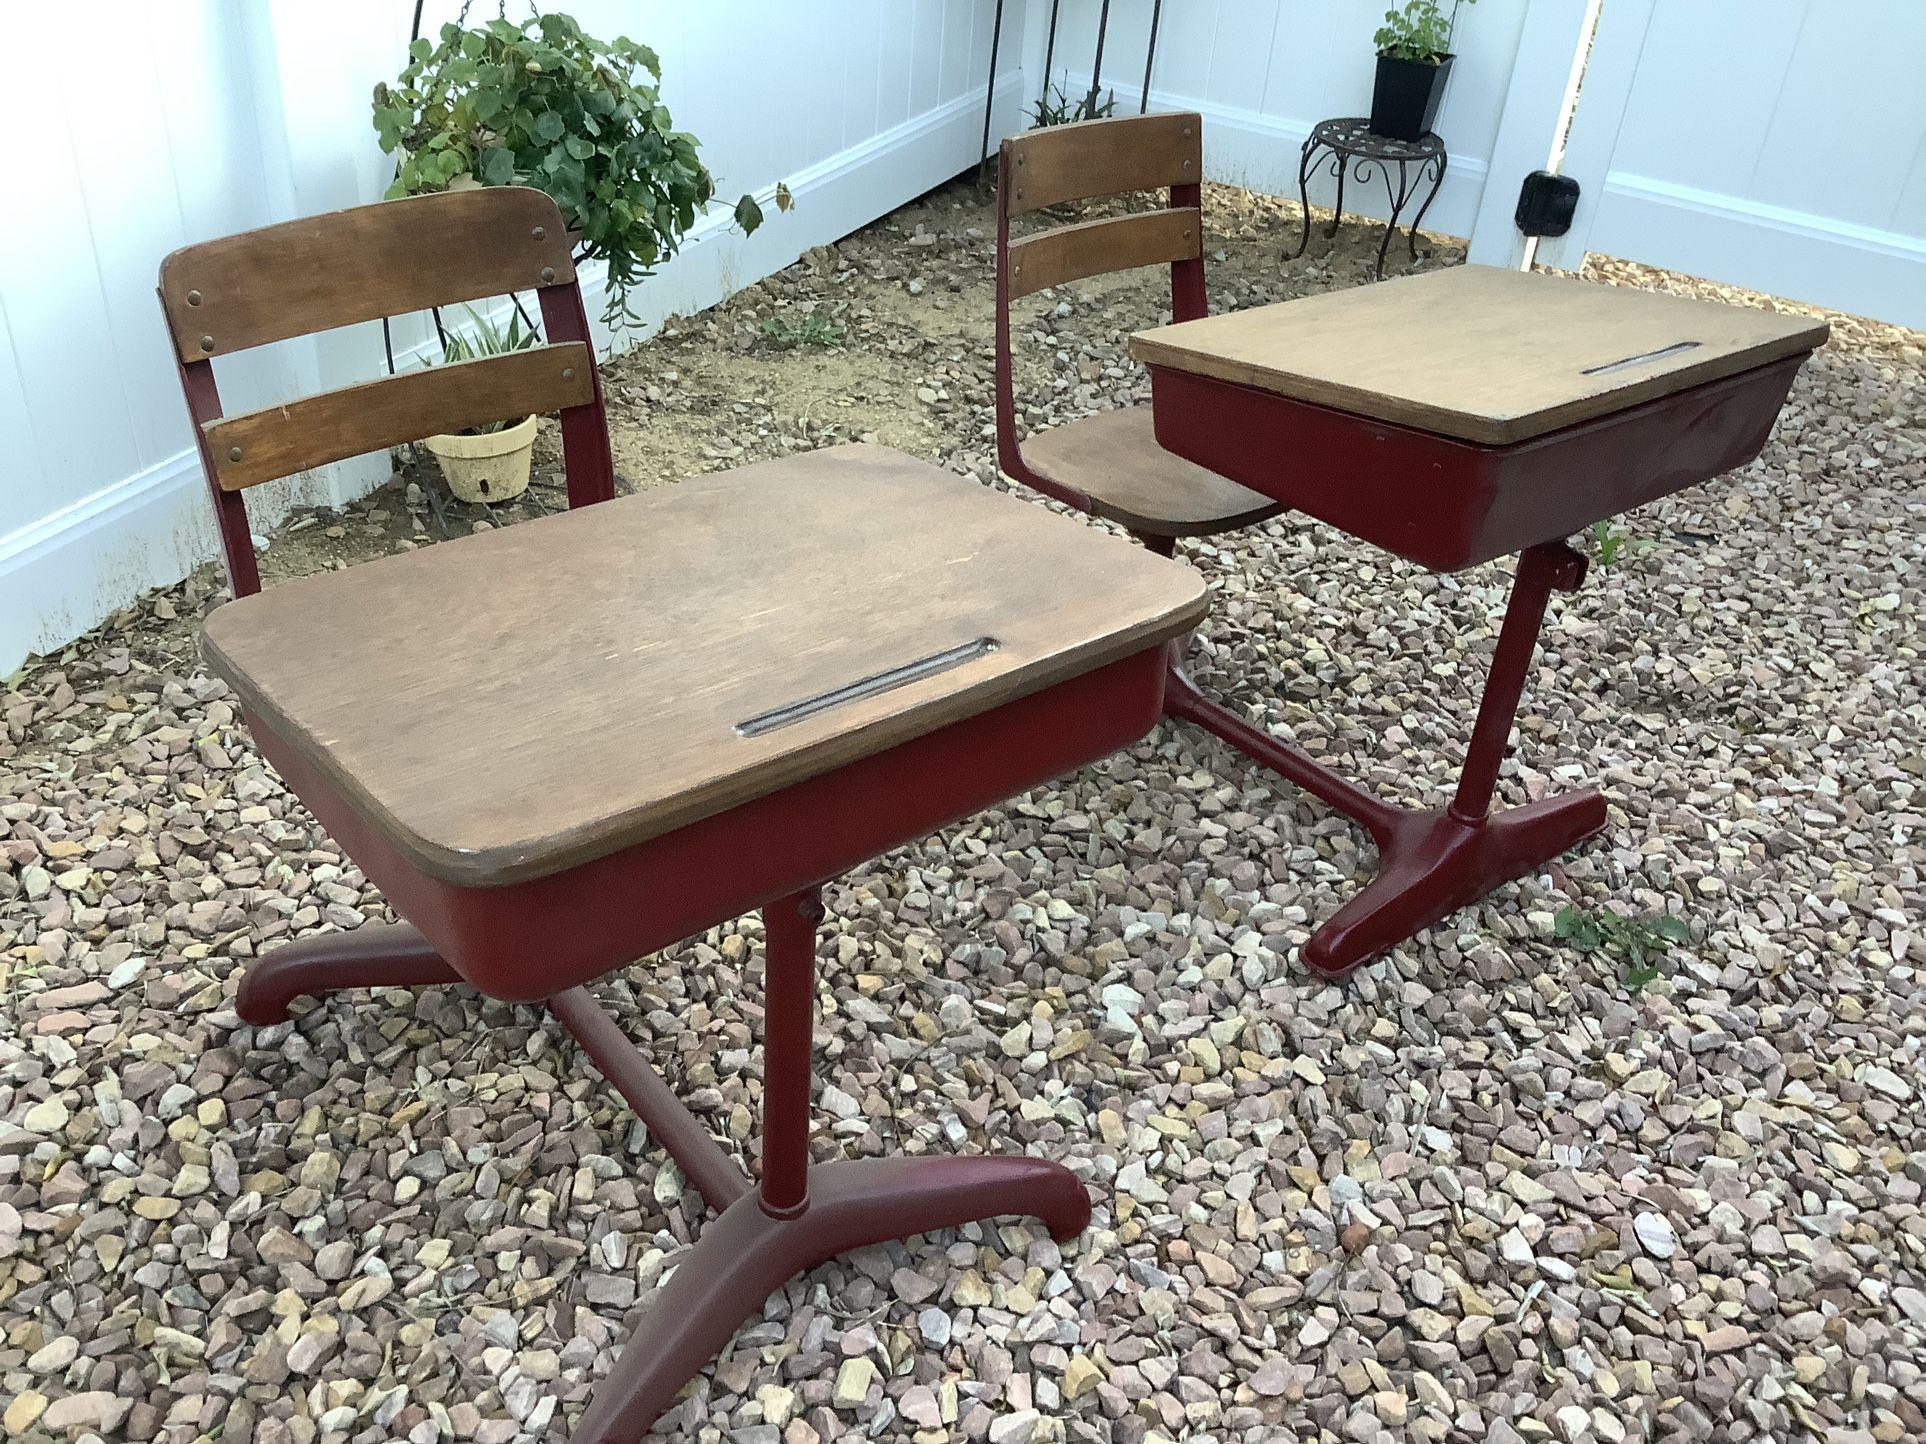 2 Vintage Adjustable School Desk and Chair for Preschool Elementary School Children Metal Wood ($ 180 Each